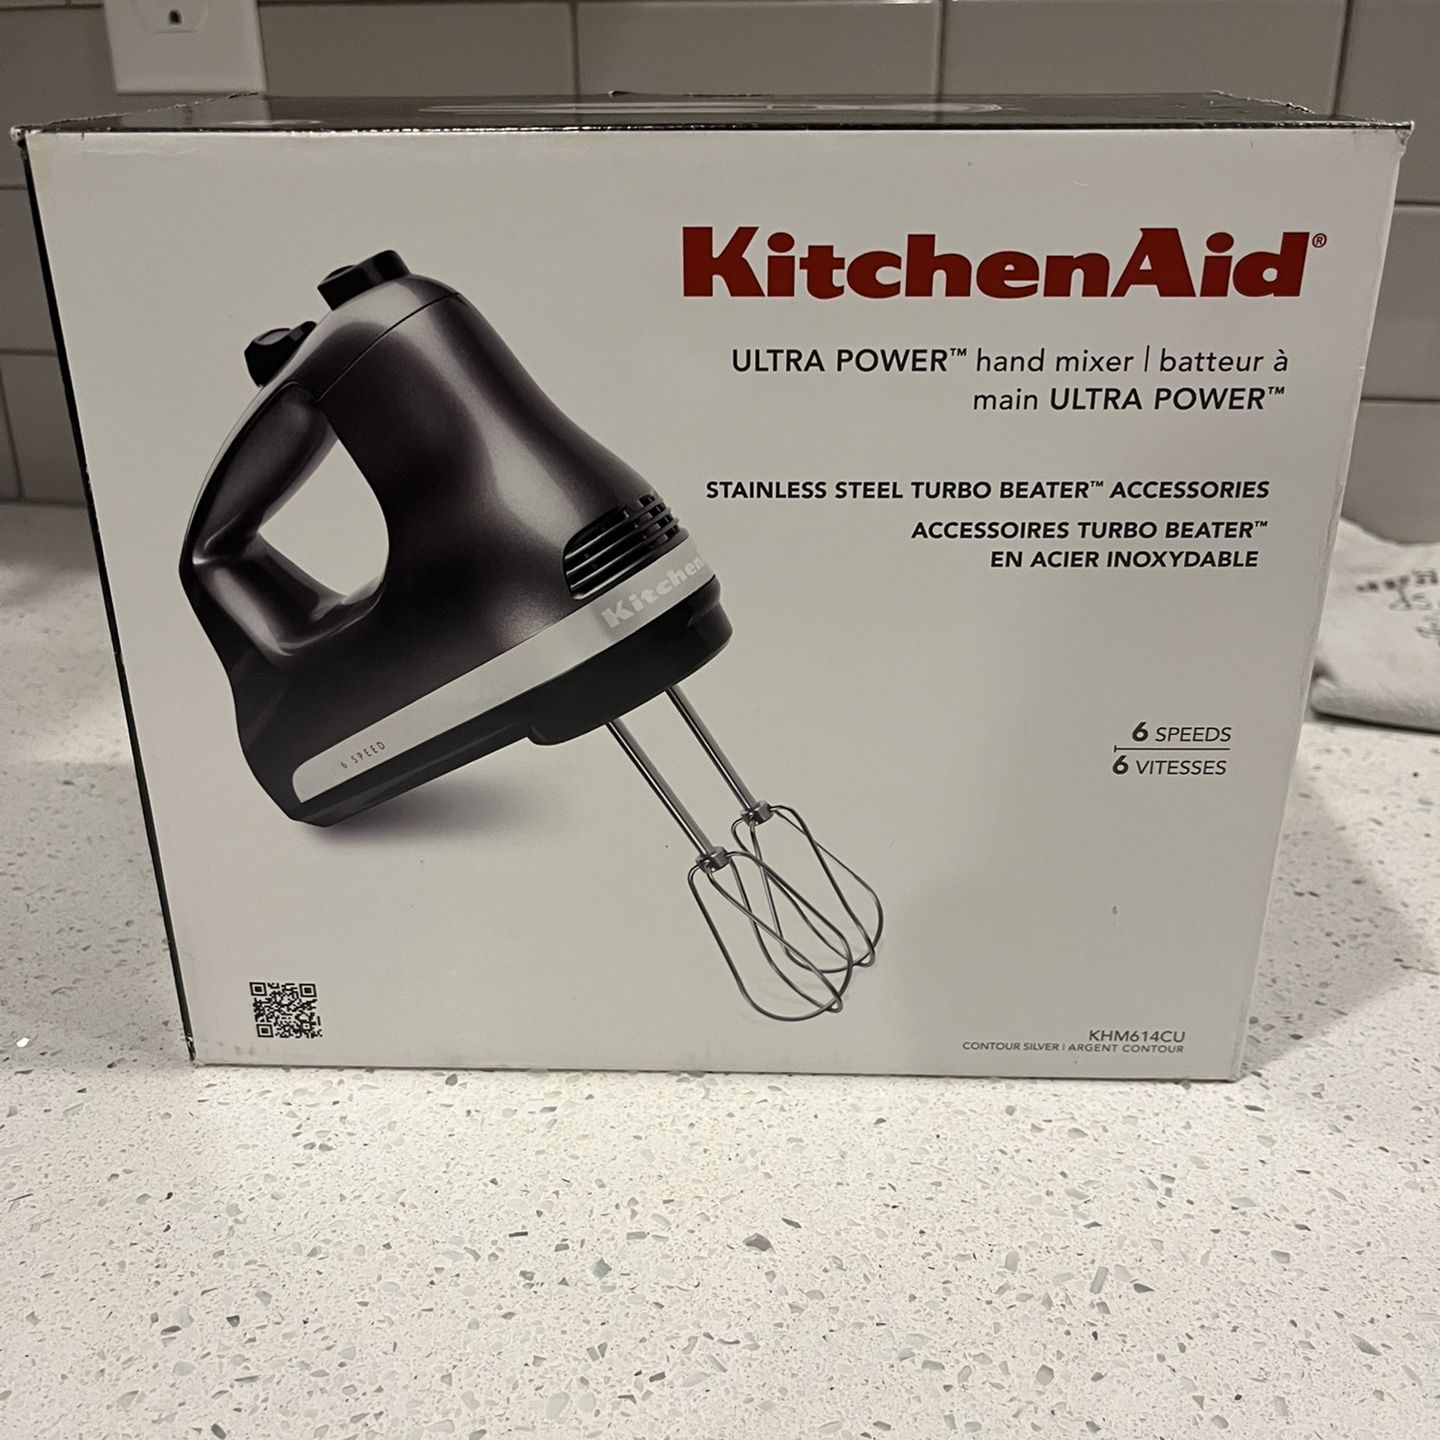 KitchenAid KHM614CU Hand Mixer with 6 Speeds, in Contour Silver